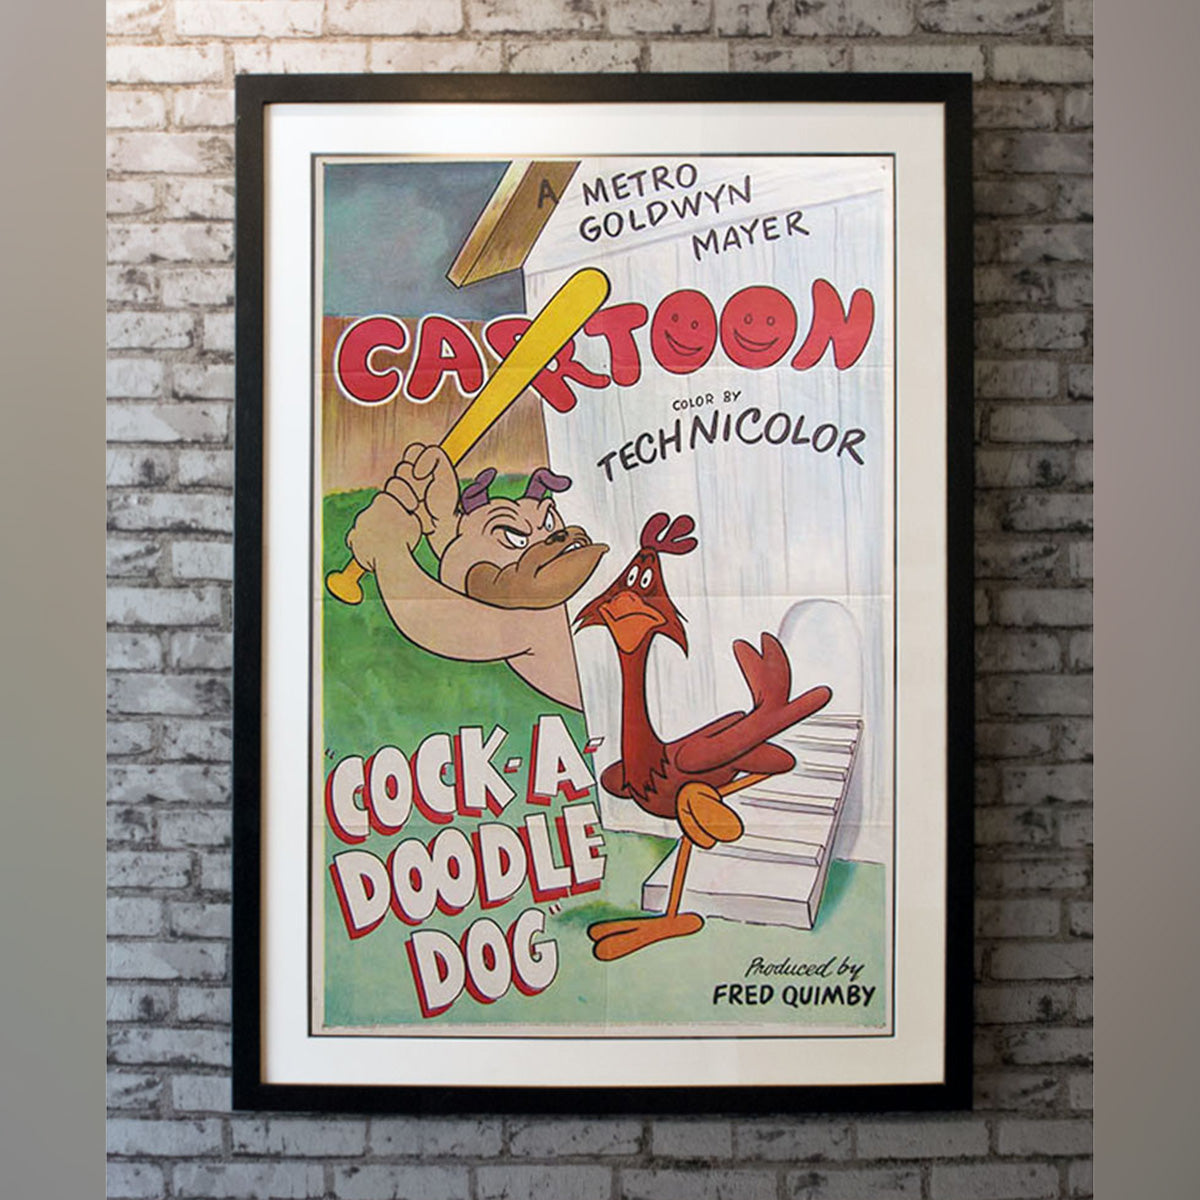 Original Movie Poster of Cock-a-doodle Dog (1950)